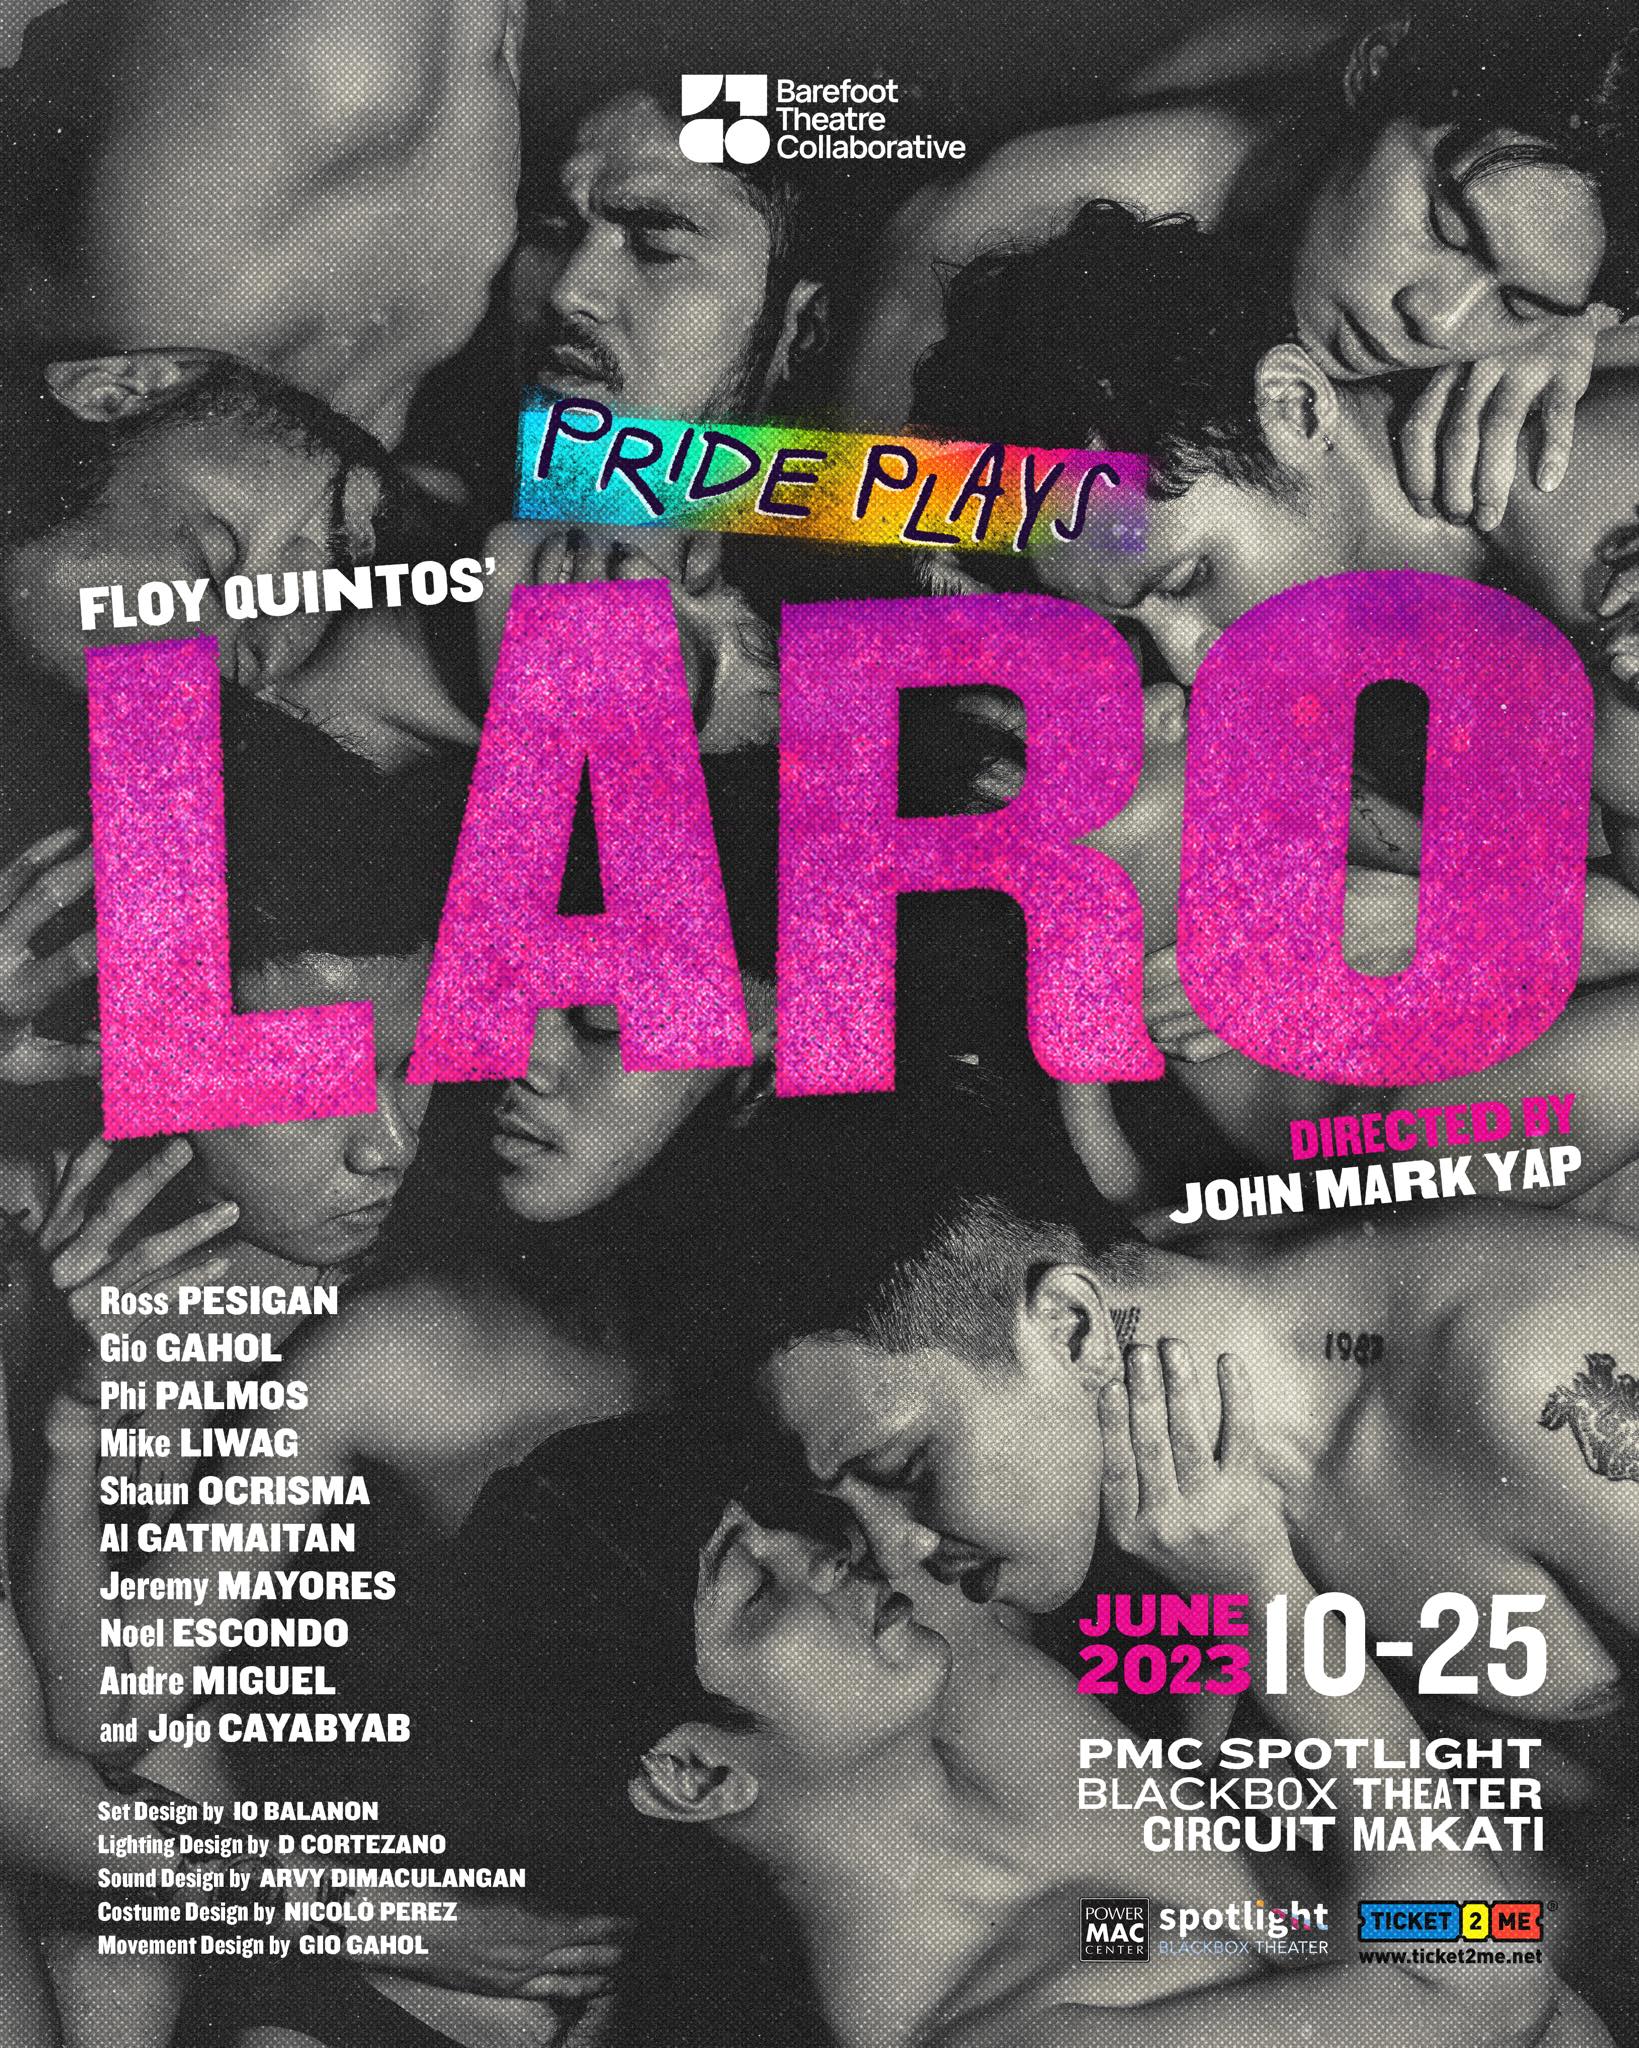 Laro, a Baregoot Theatre Collaborative play